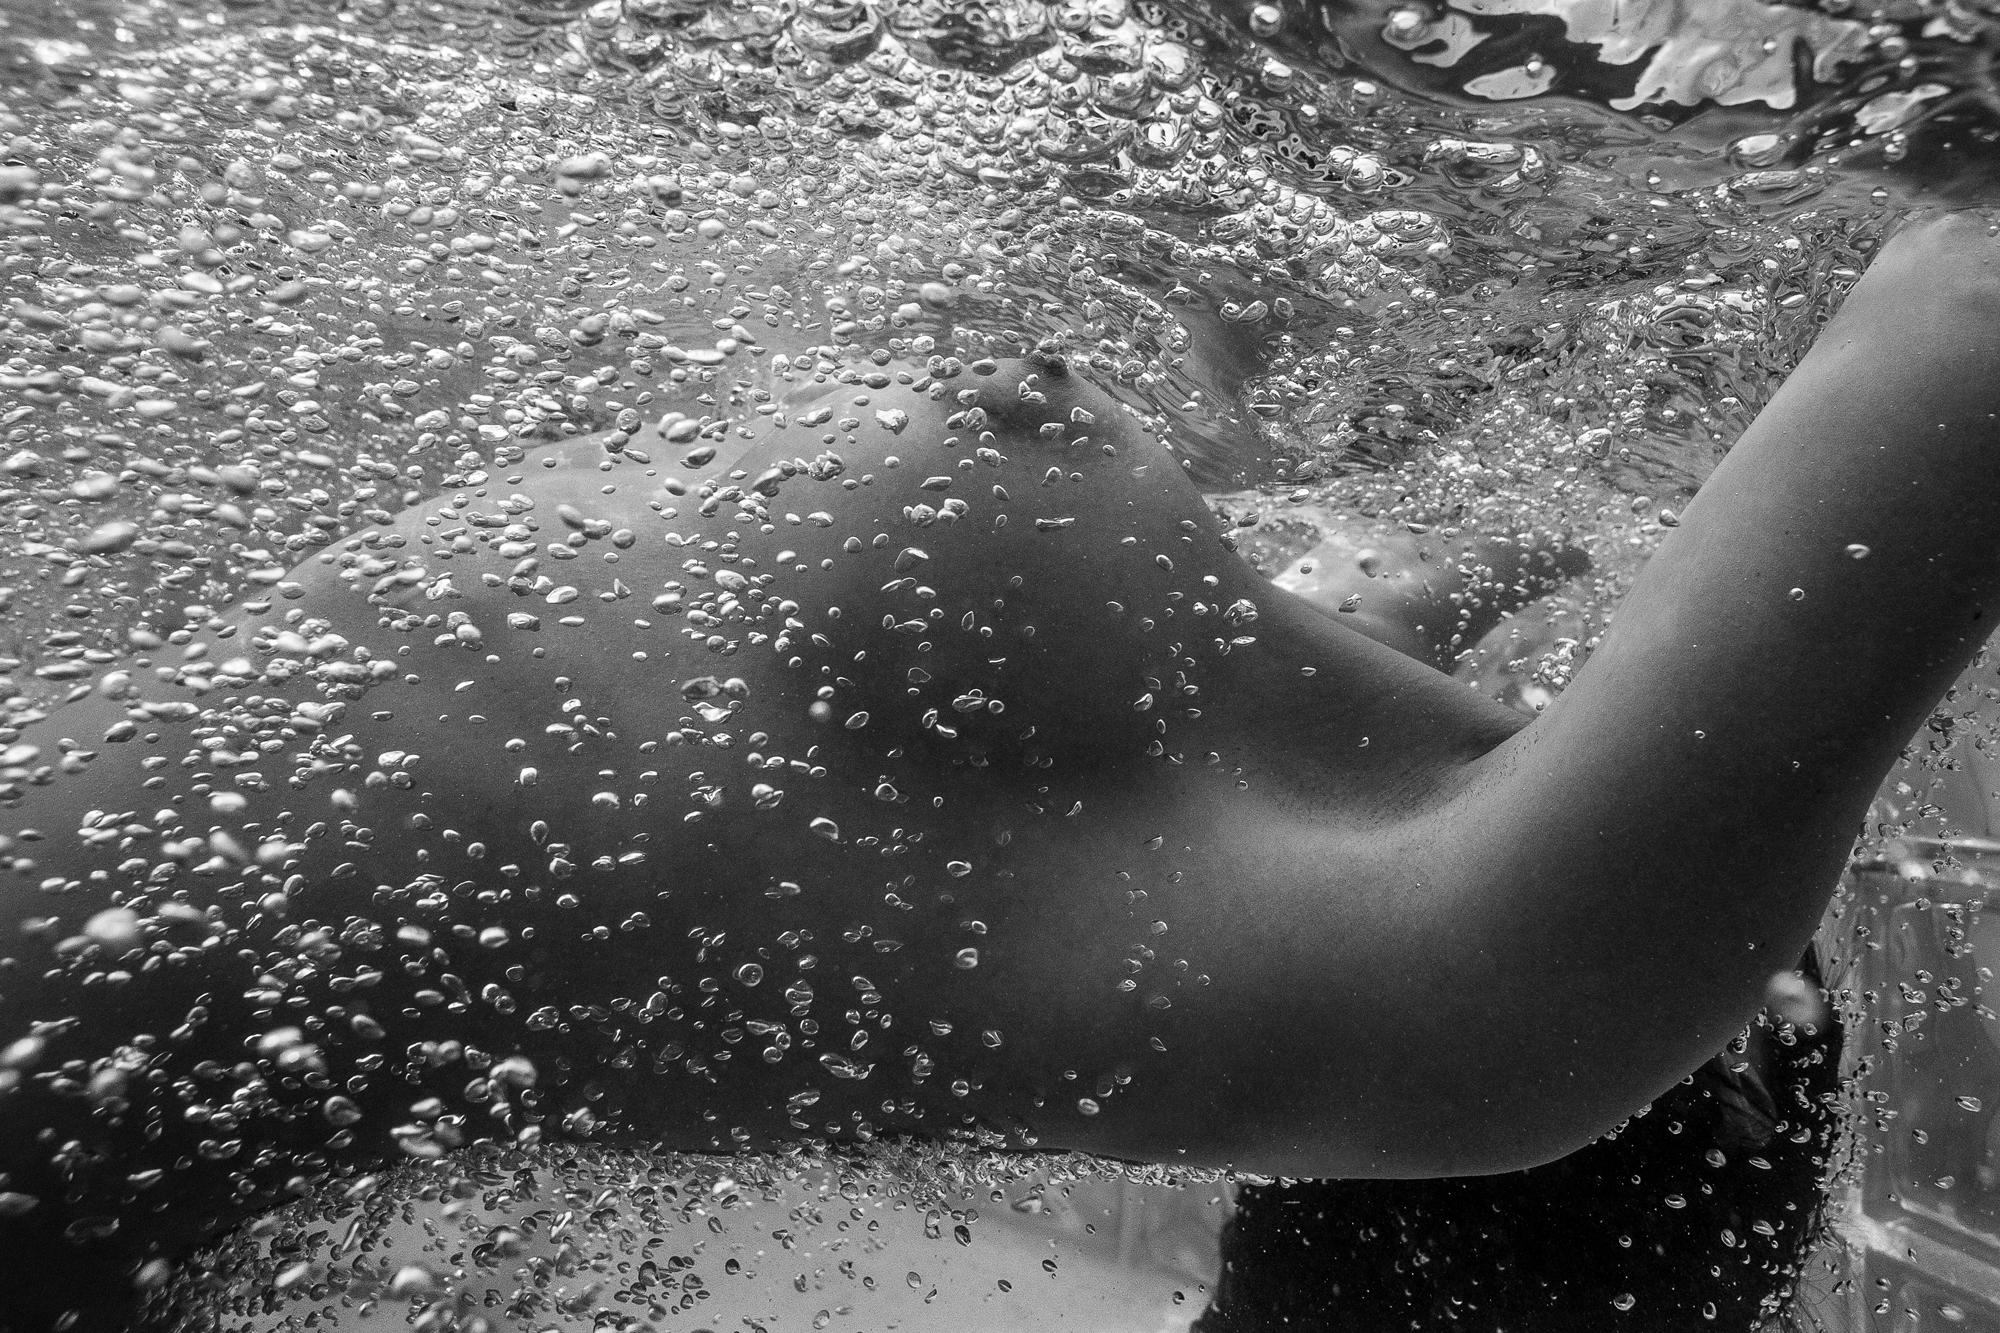 Alex Sher Nude Photograph - Bubbles - underwater nude b&w photograph - archival pigment print 23 x 35"